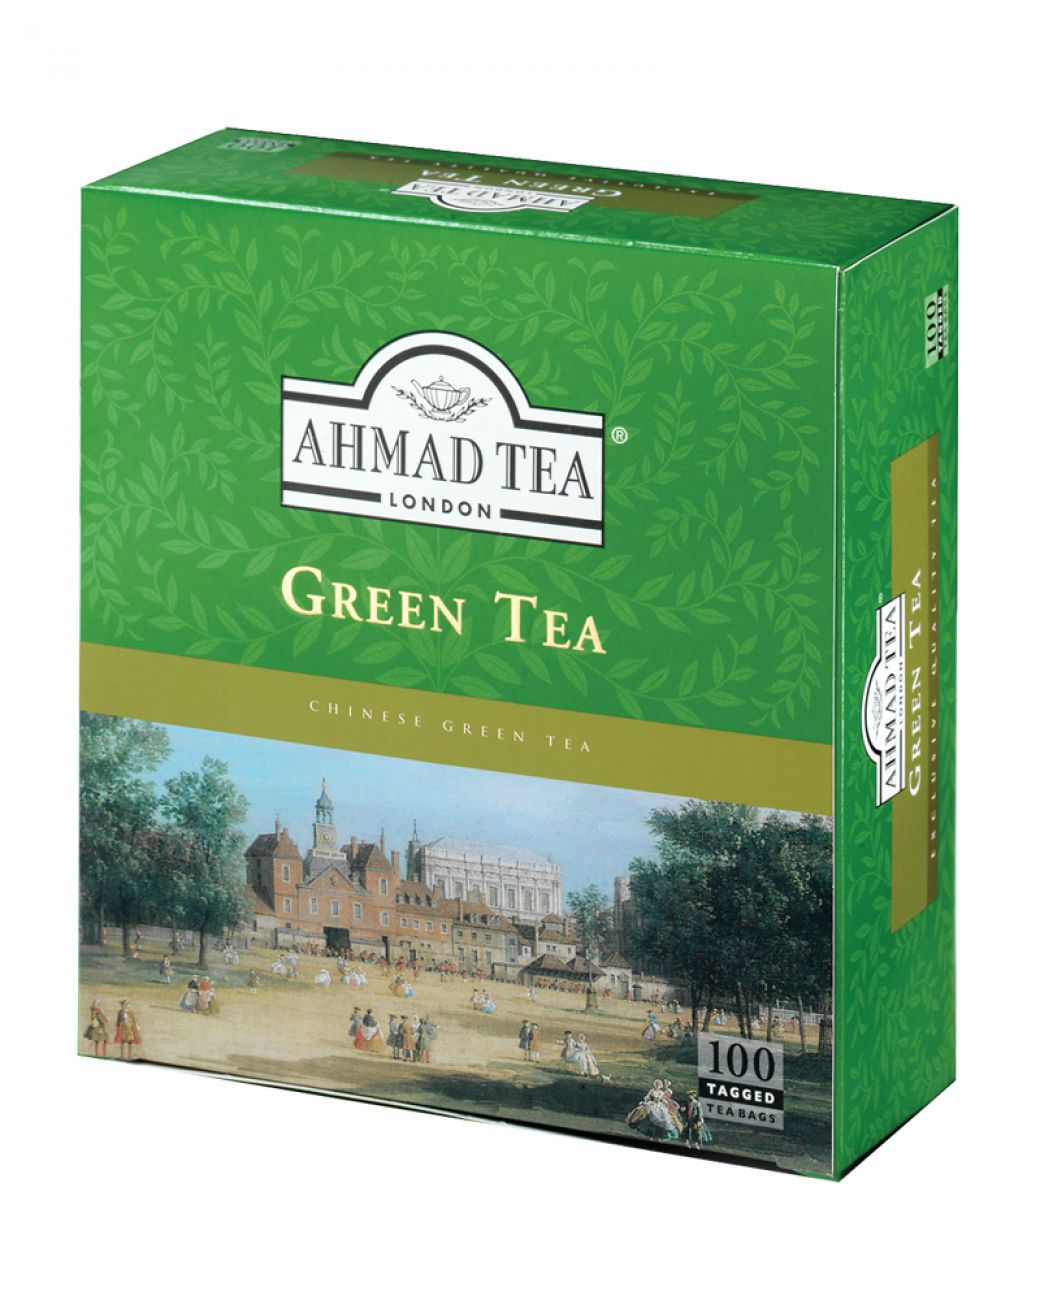 Ahmad Tea Bags Green Tea (100 bags) - Aytac Foods